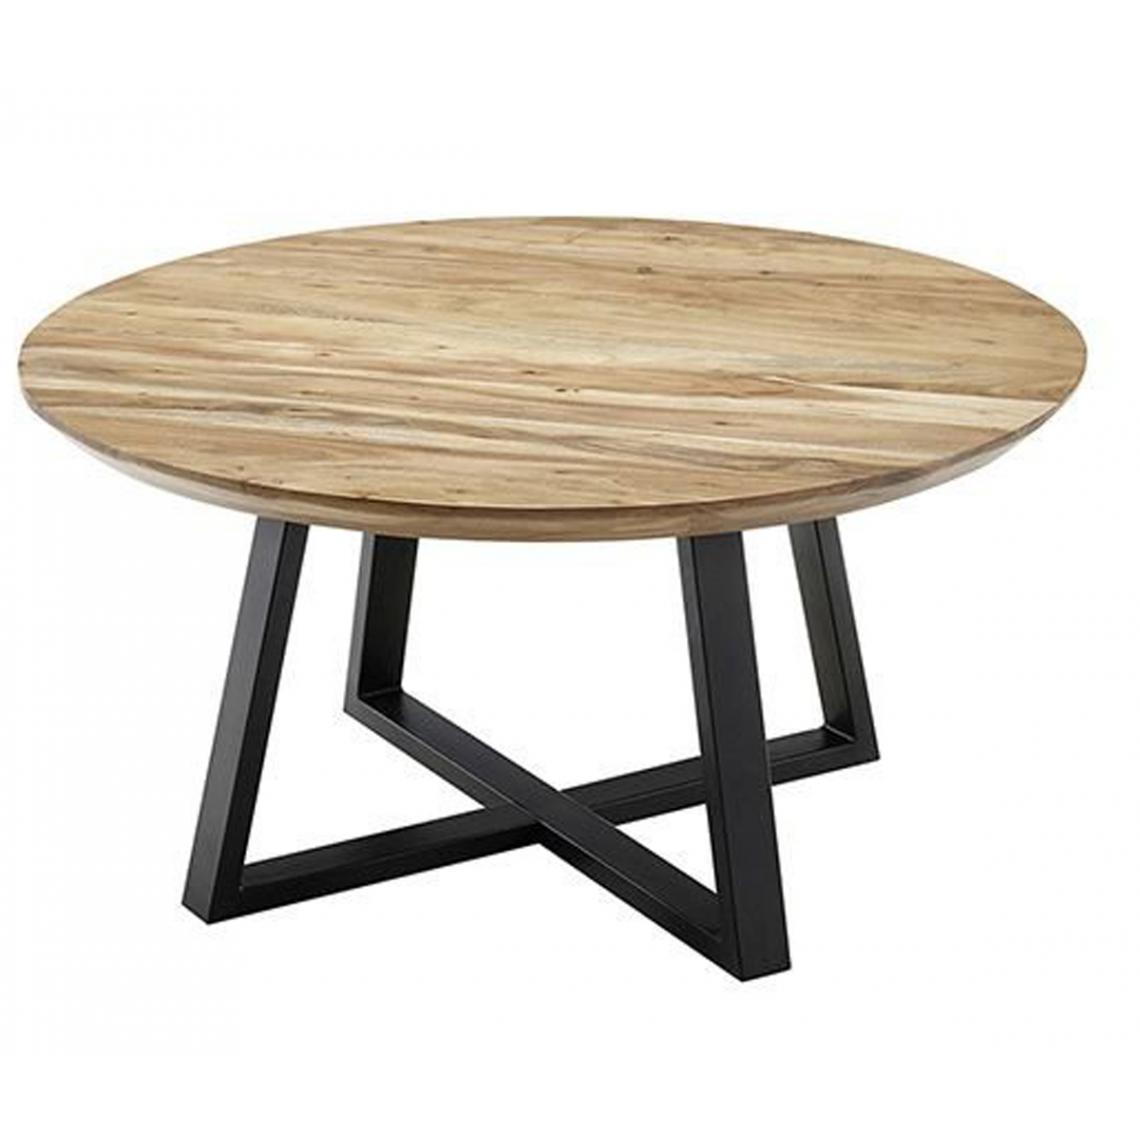 Pegane - Table basse ronde en acacia massif nature - L.90 x H.45 x P.90 cm - Tables basses